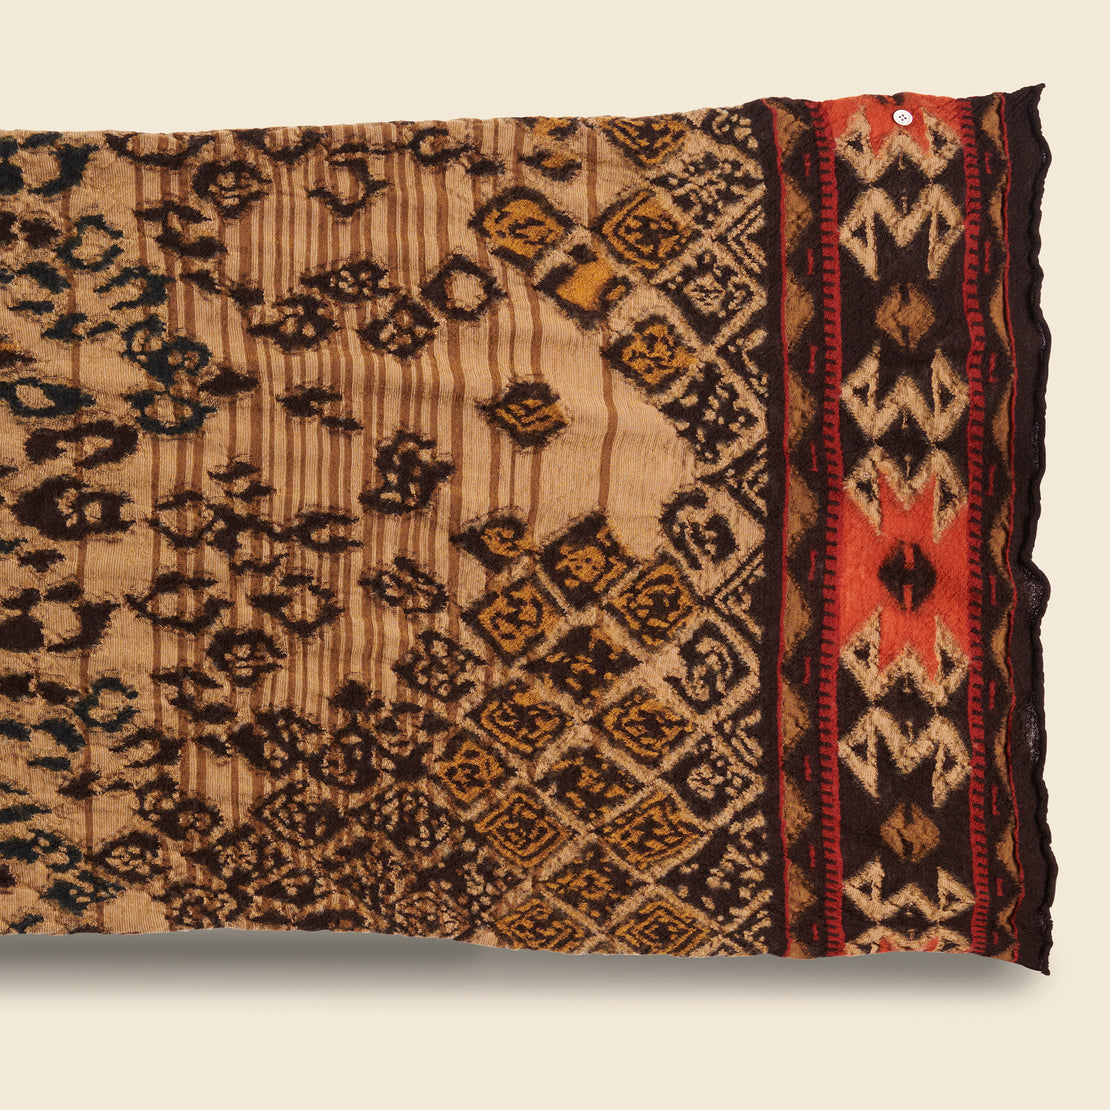 Compressed Wool Coptic Leopard Scarf - Beige